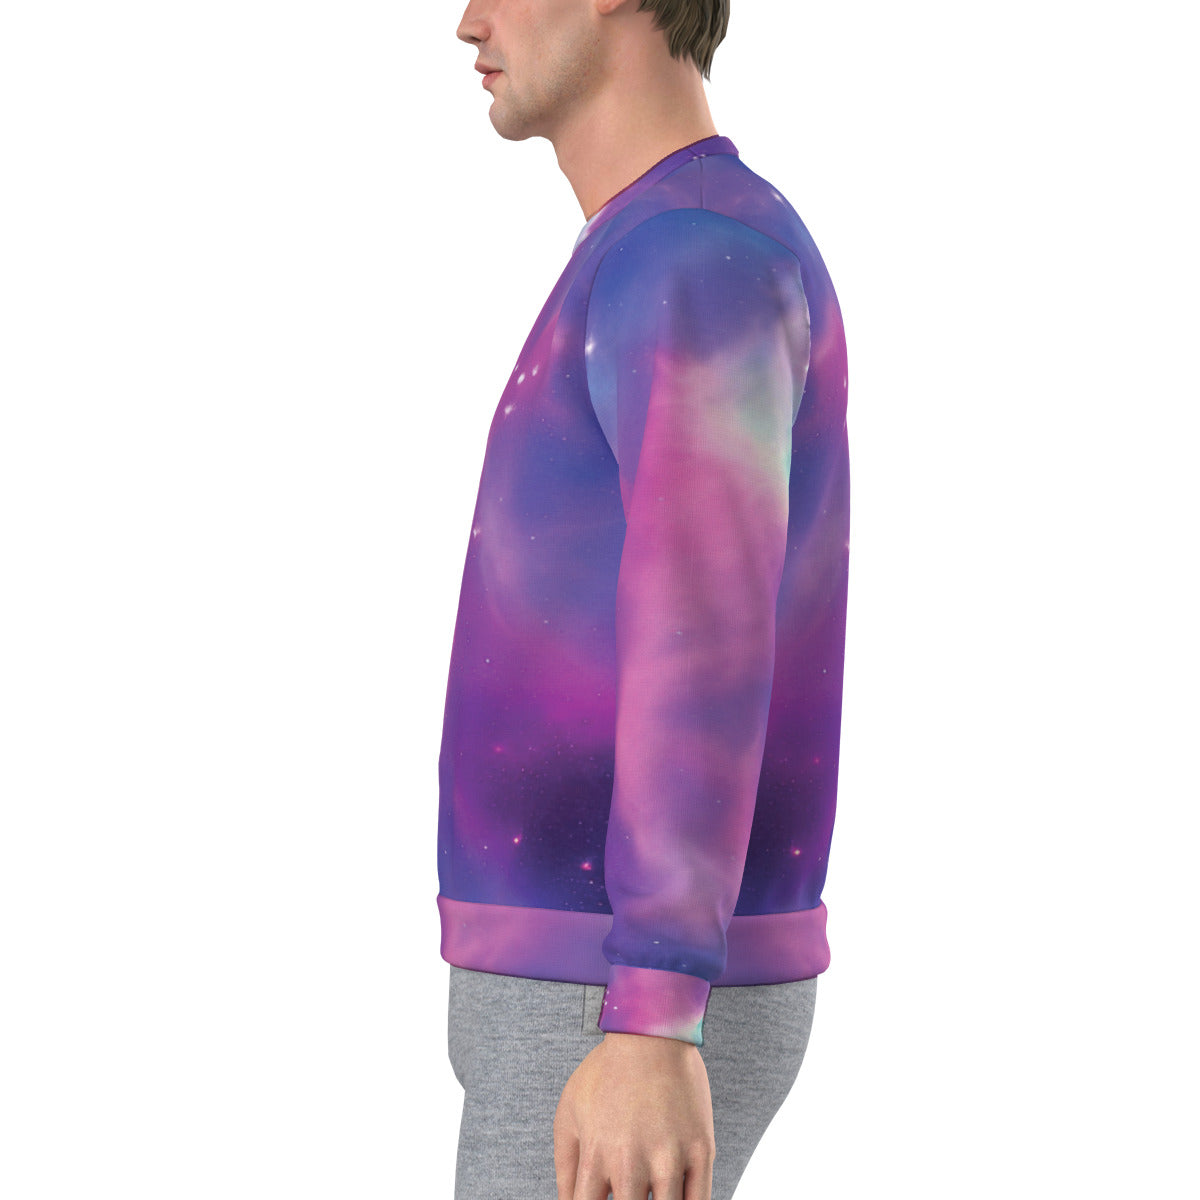 Vibrant Iridescent Cosmic Nebula Men's Heavy Fleece Fashion Sweatshirt - The Nebula Palace